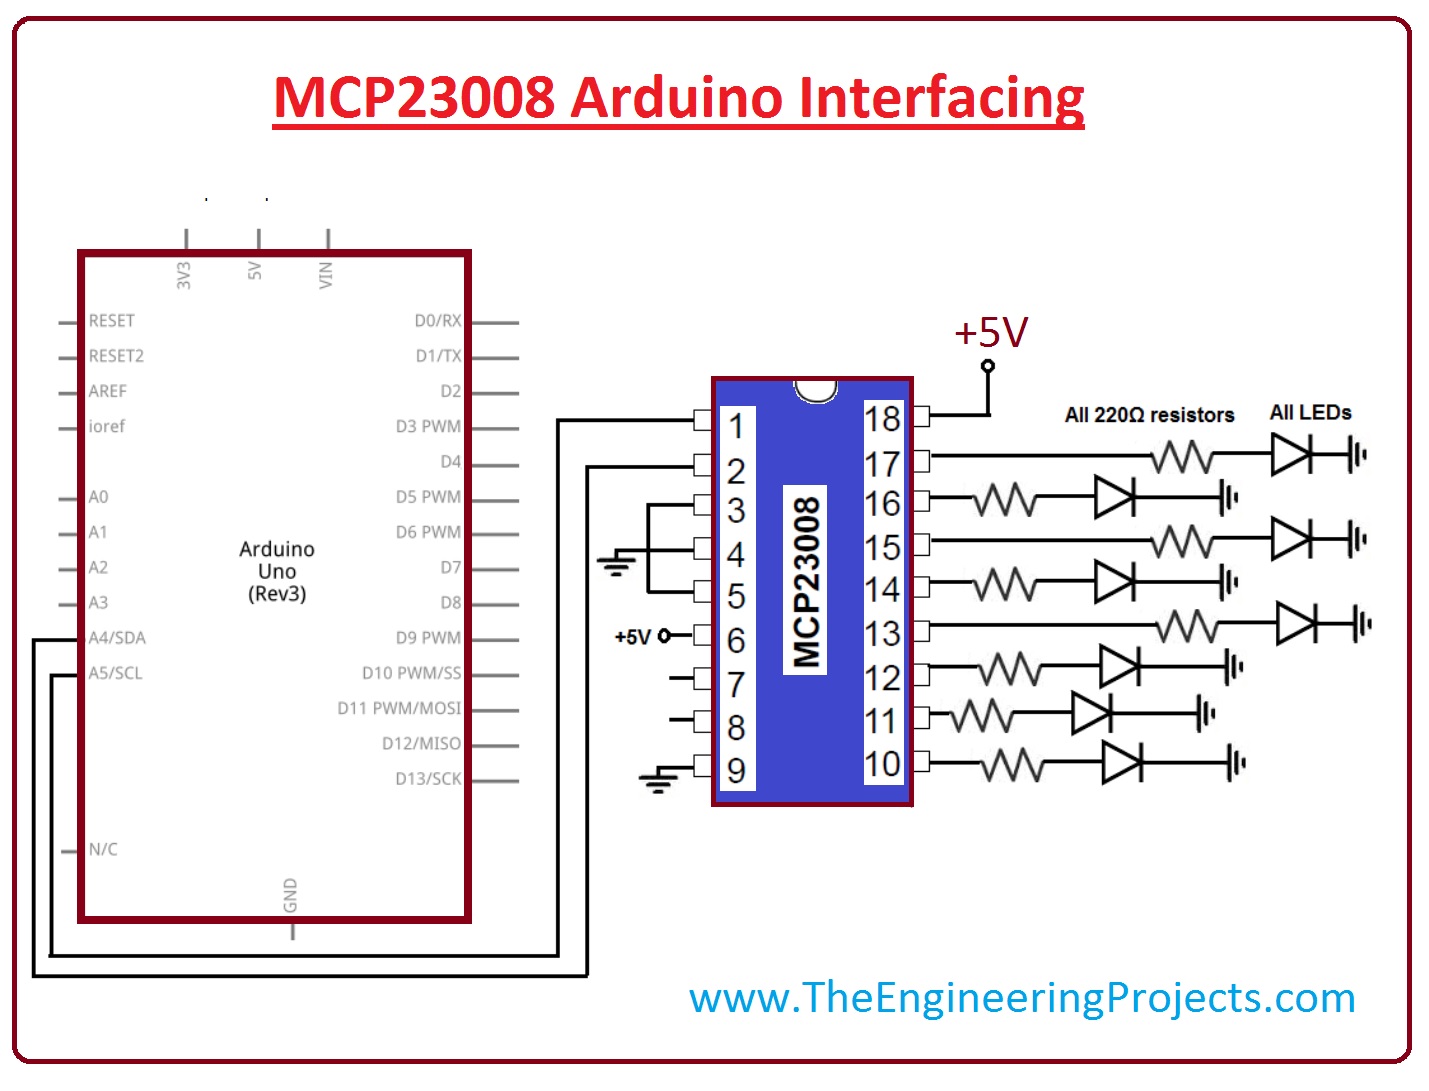 introduction to mcp23008, mcp23008 pinout, mcp23008 working,mcp23008 application, mcp23008 features, mcp23008 arduino interfacing, mcp23008 applications, mcp23008